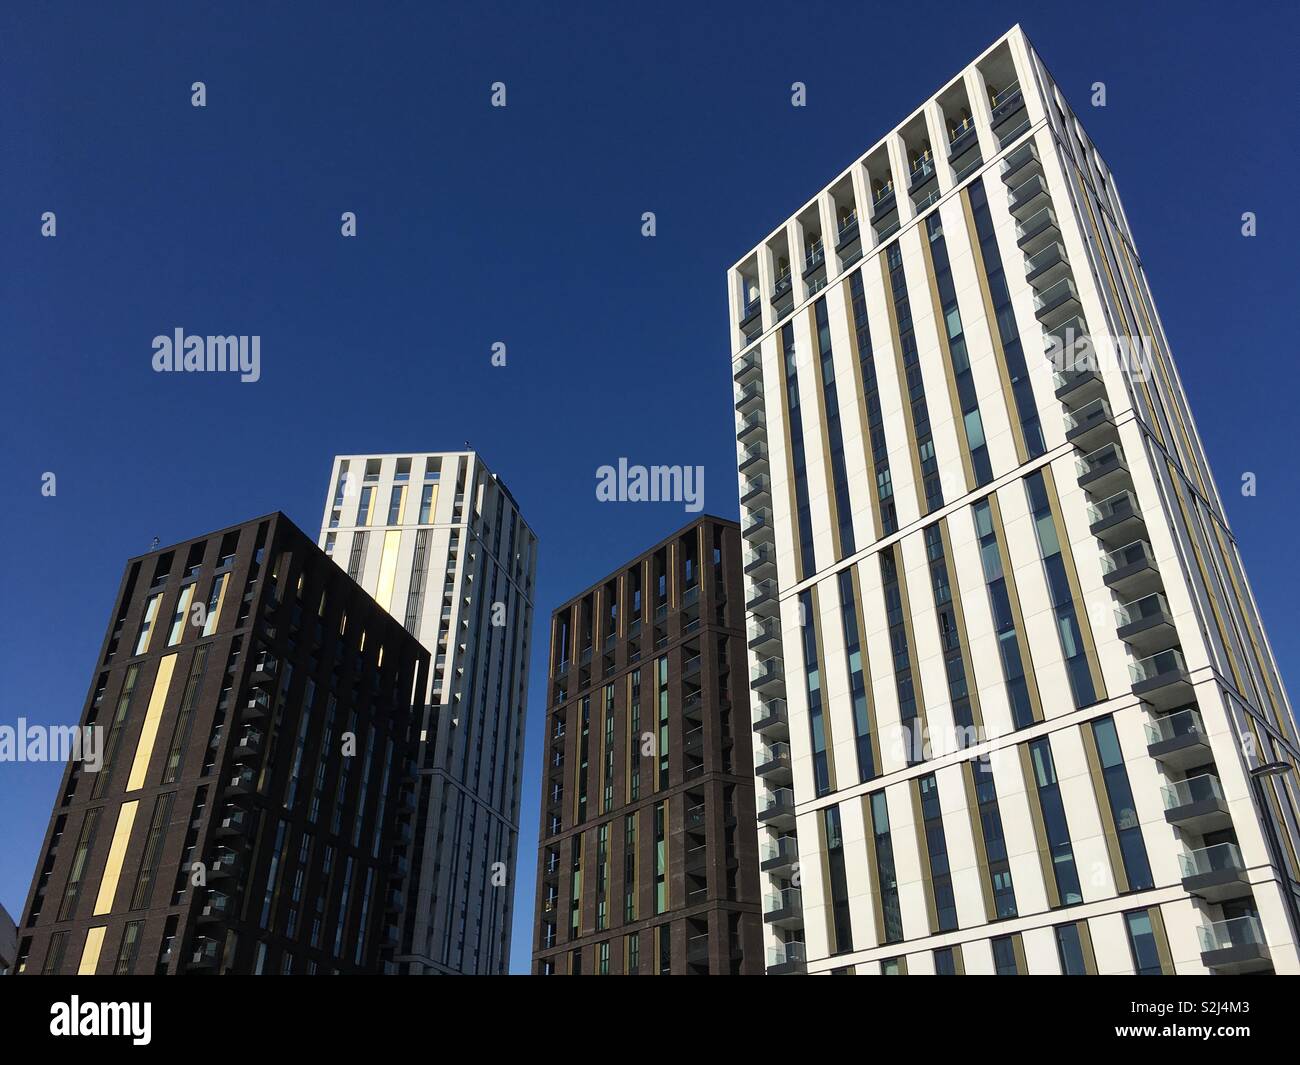 Tall buildings on Lewisham High Street in London, England February 27 2019 Stock Photo